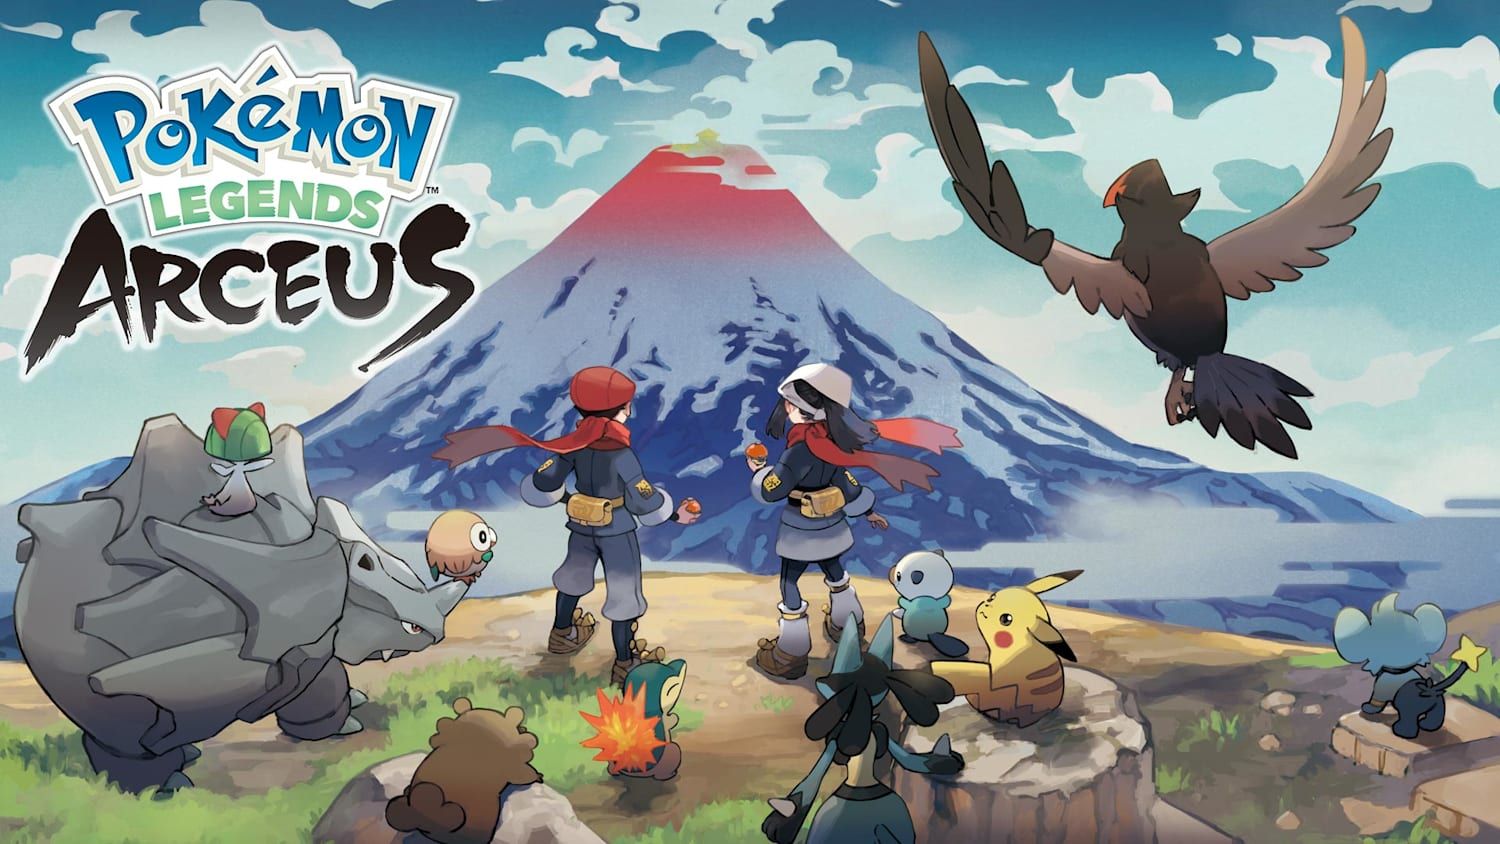 Pokemon Legends: Arceus Daybreak update available now